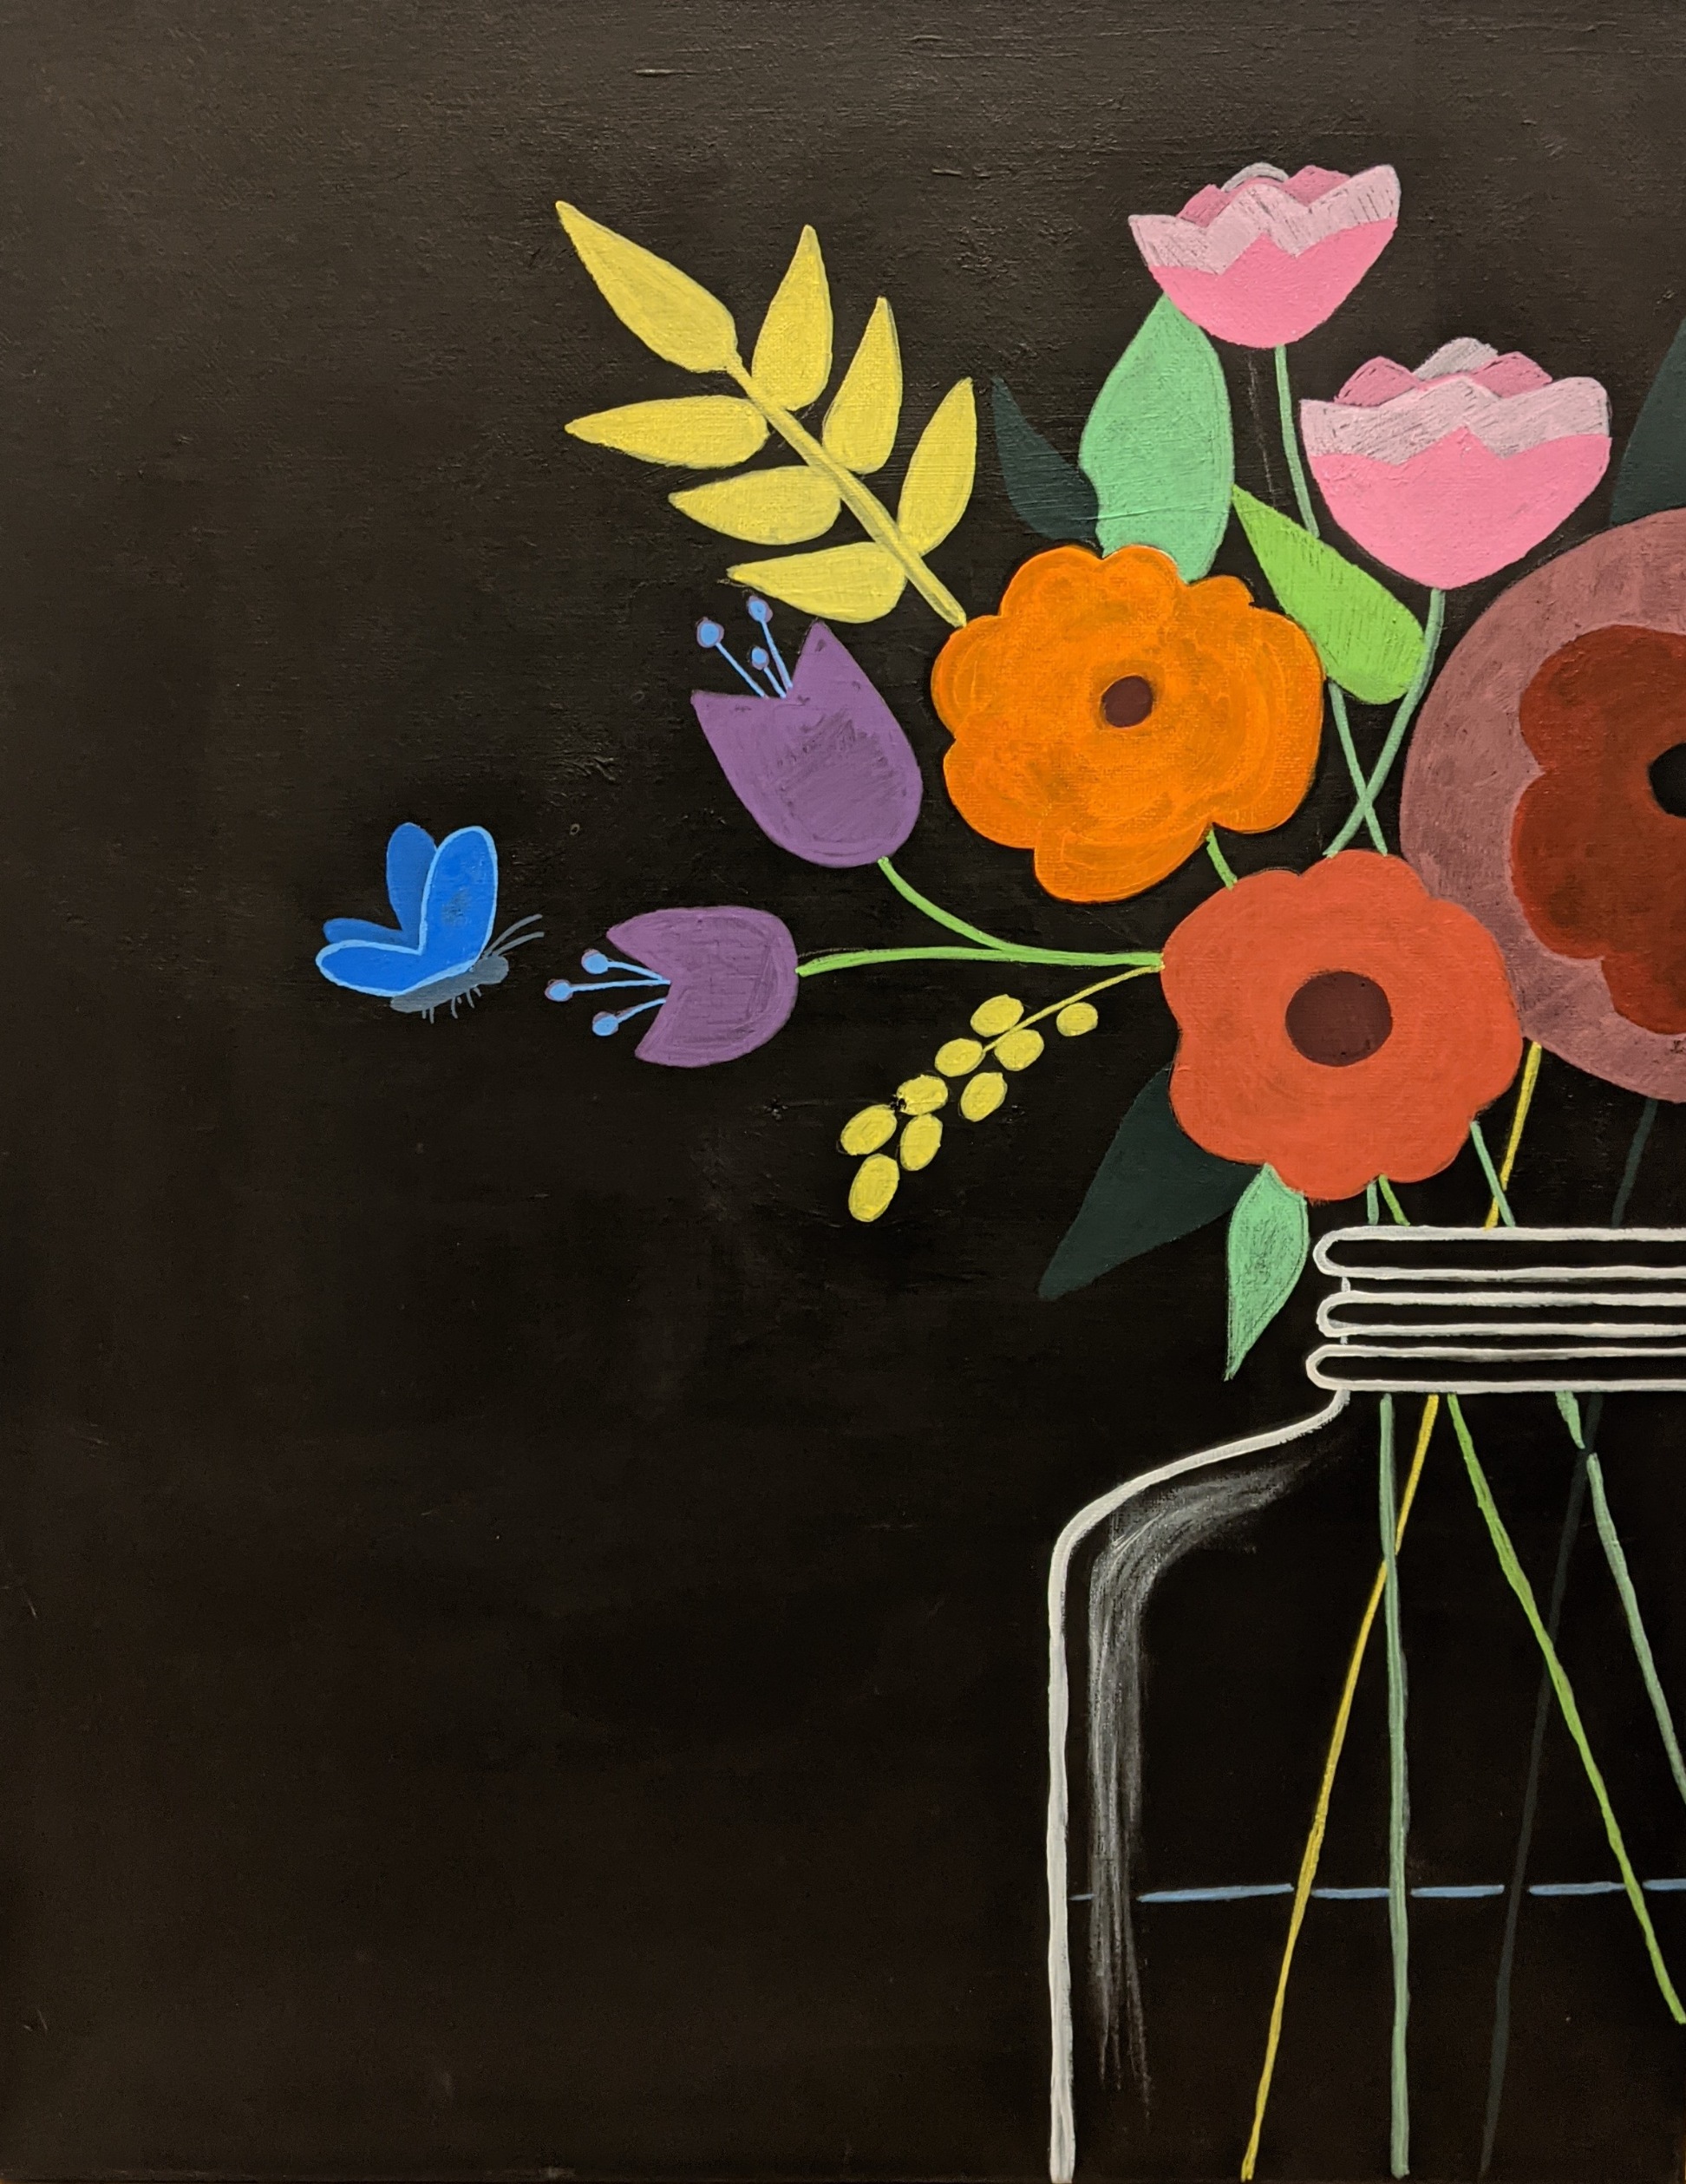 In Studio – Black Canvas Vase with Flowers